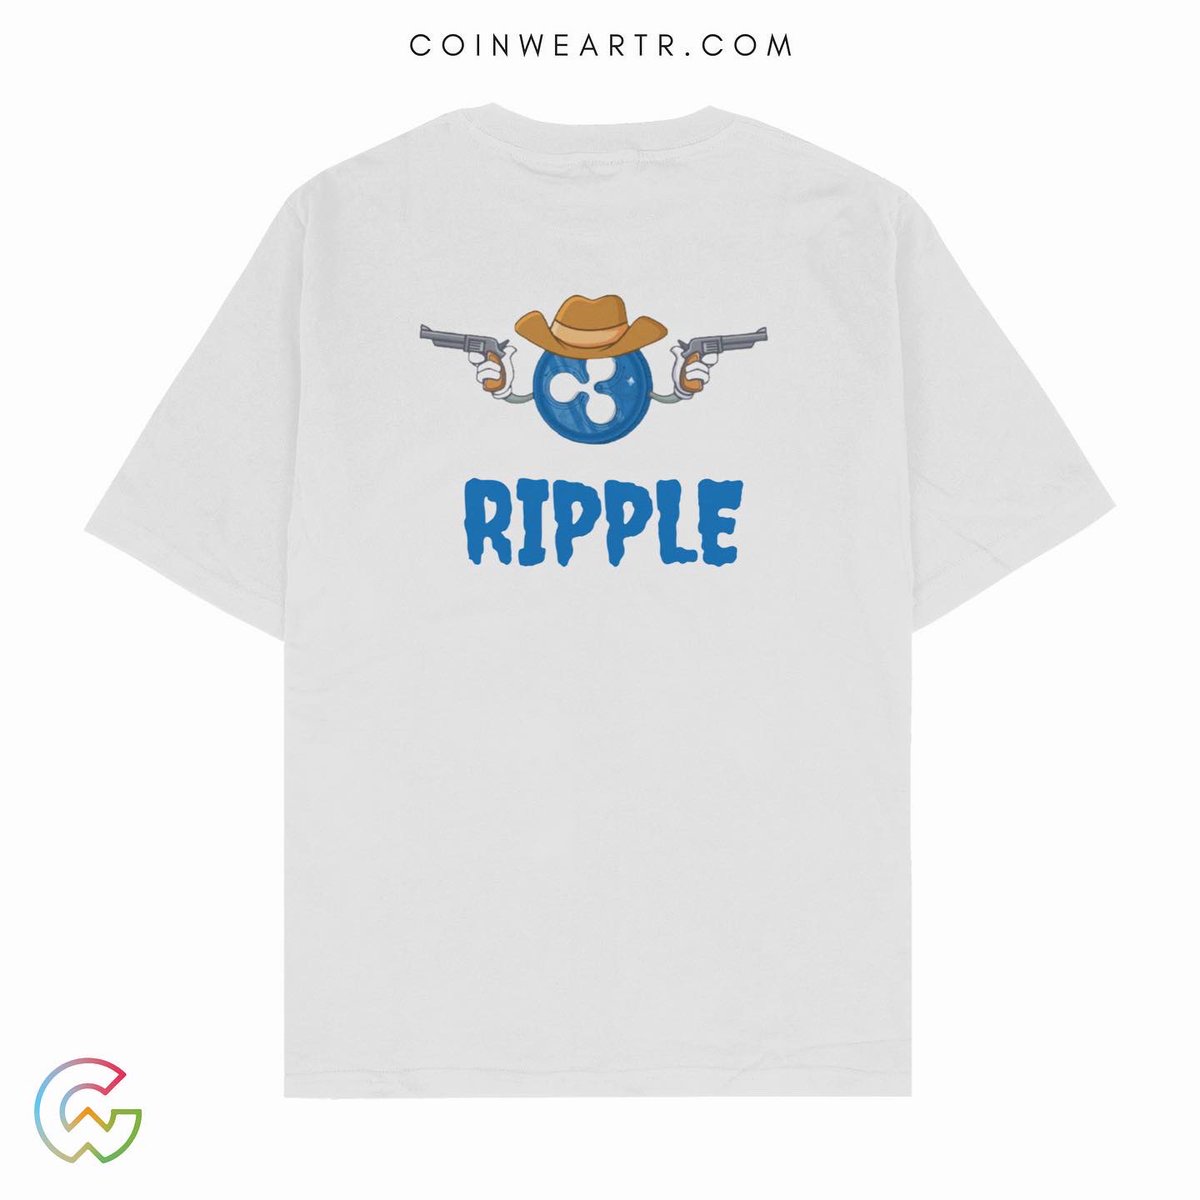 Coinwear Sırt Detaylı Cowboy Ripple T-Shirt %100 cotton coinweartr.com